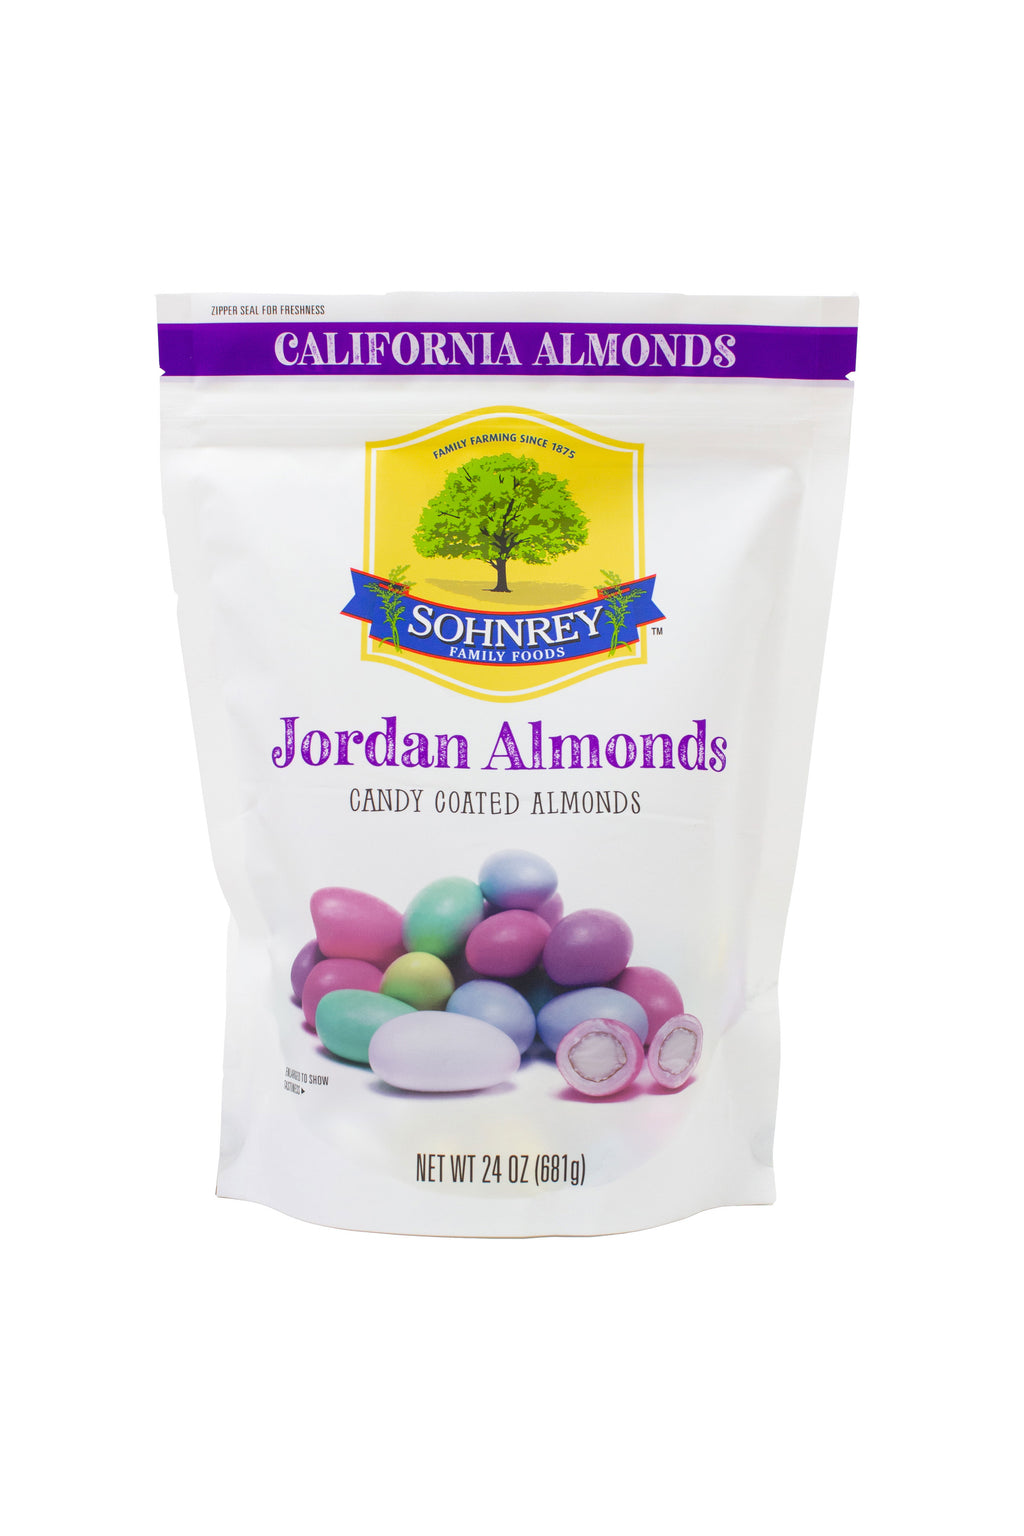 Jordan Almonds (Pastel Colors)